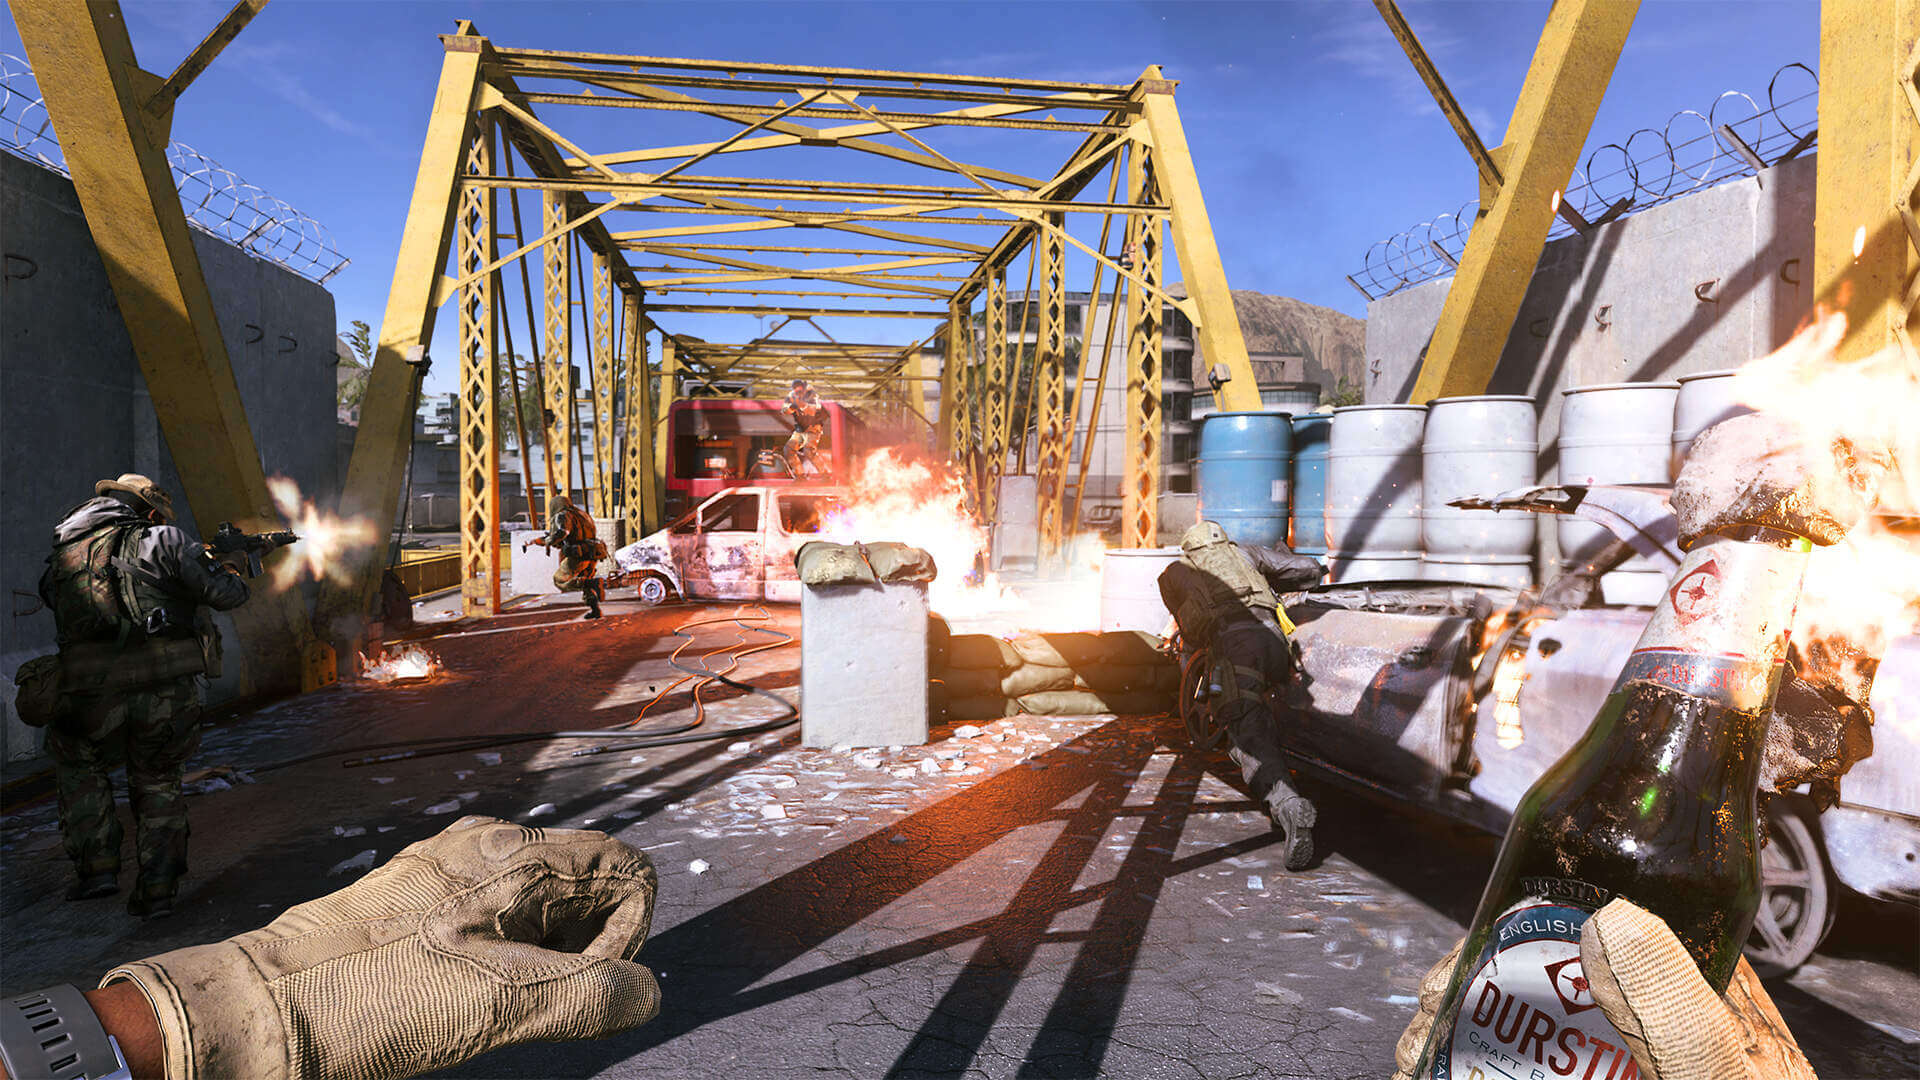 Gameplay screenshot of Modern Warfare (2019), showcasing the player preparing to throw a lit molotov cocktail.